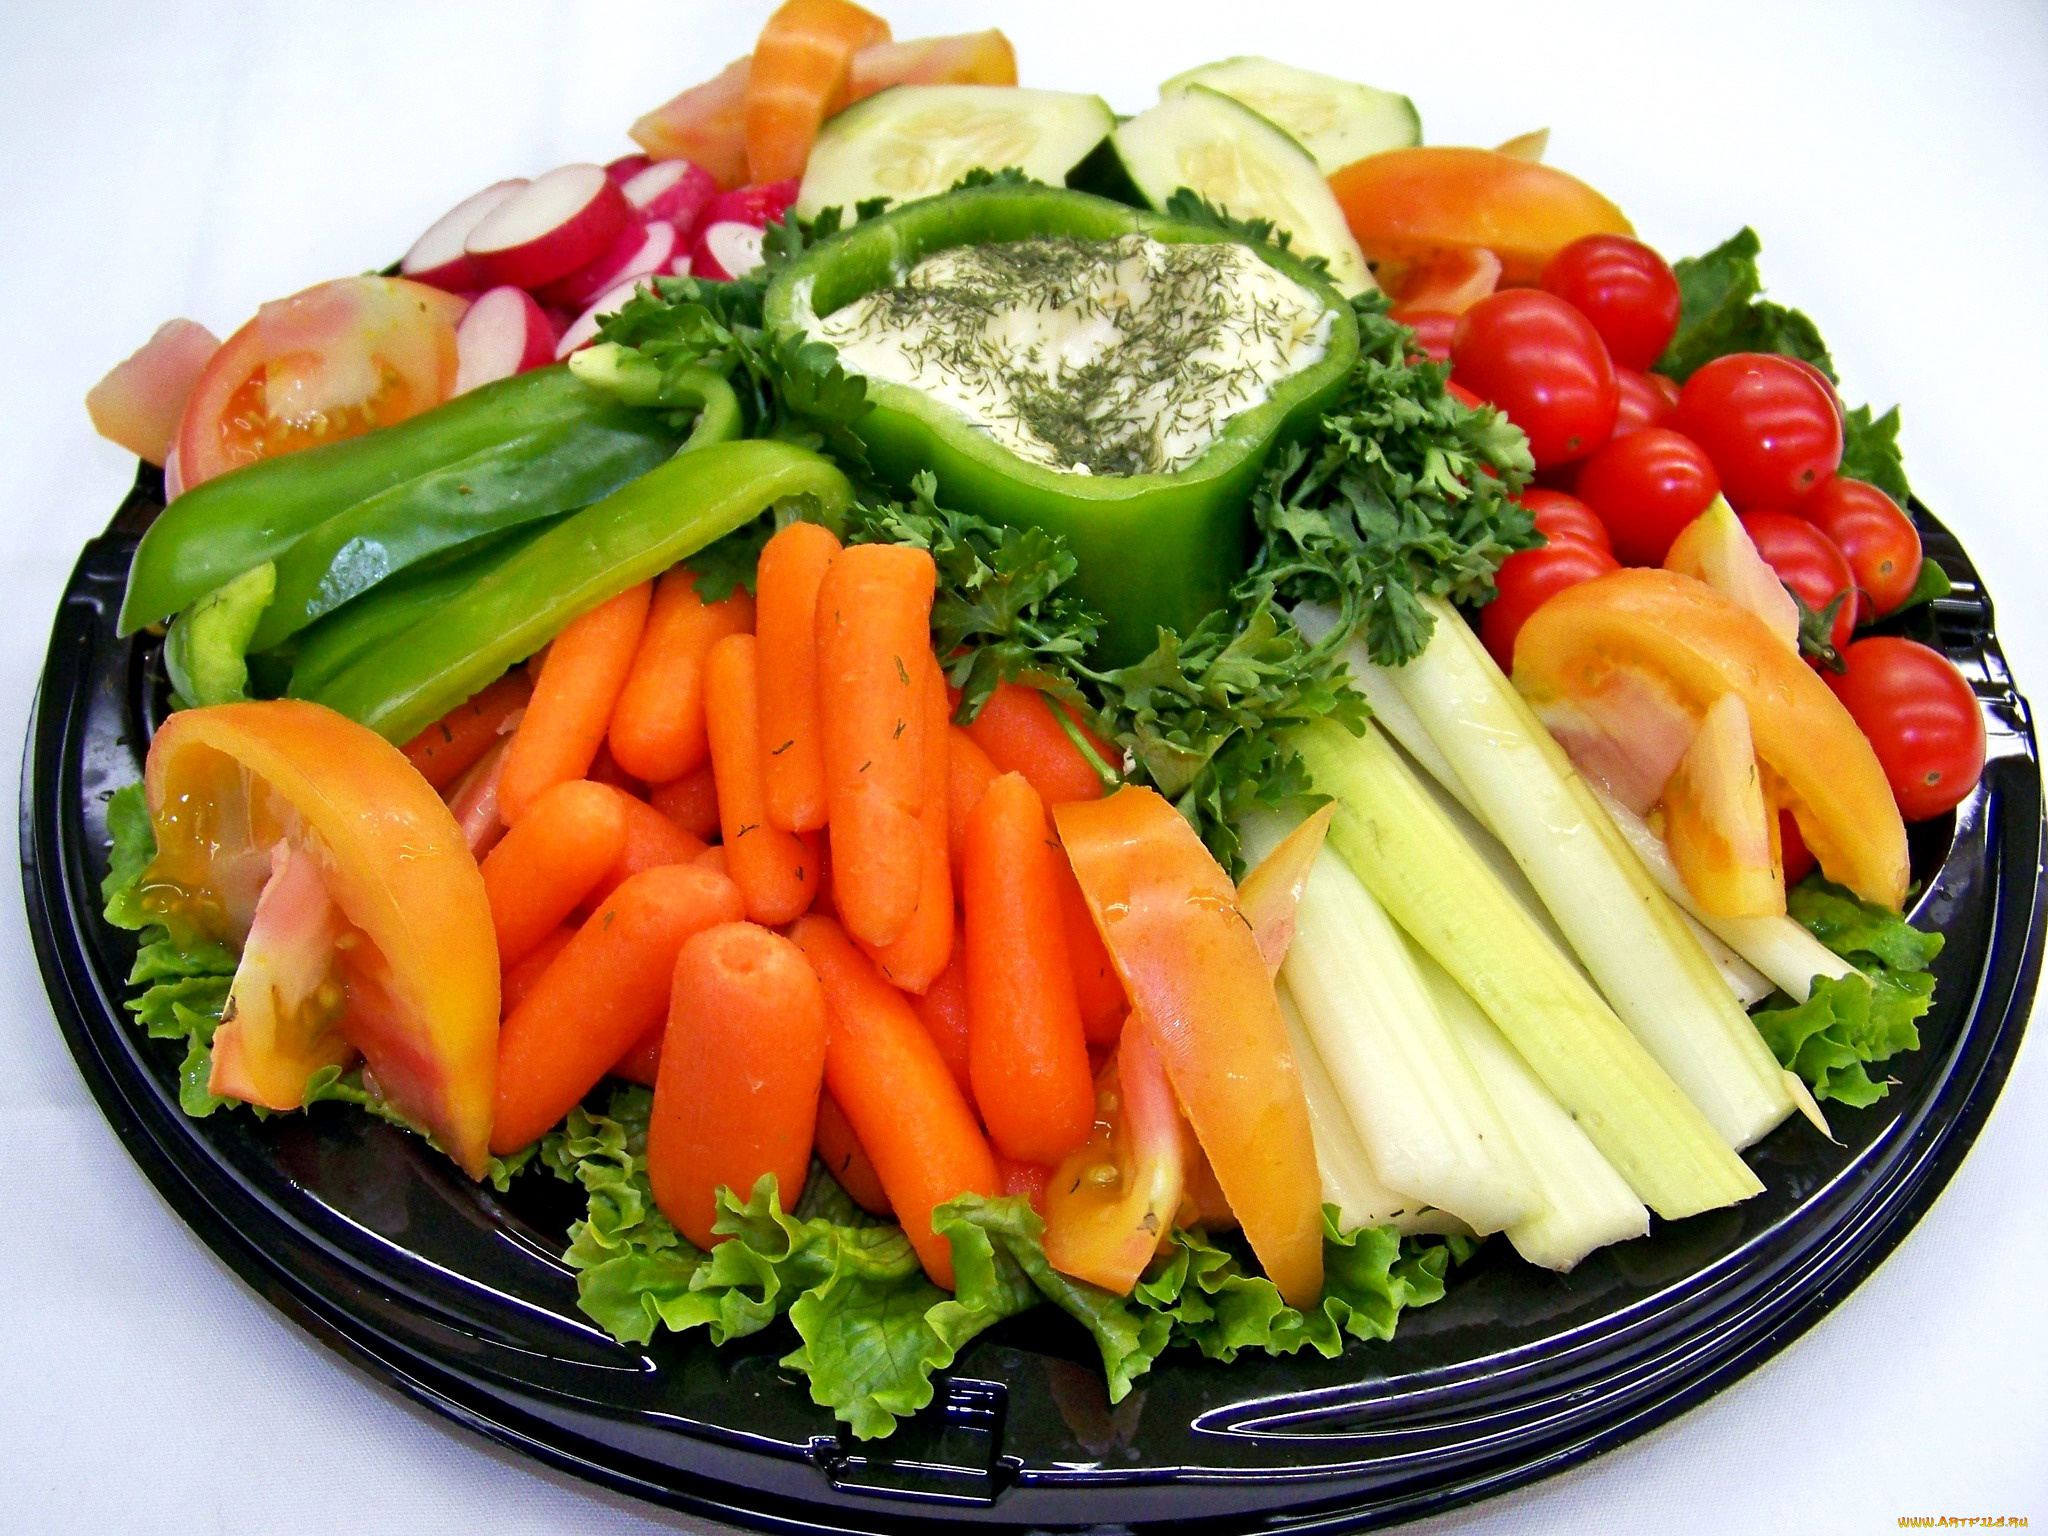 еда, овощи, овощная, нарезка, редис, помидоры, черри, перец, морковь